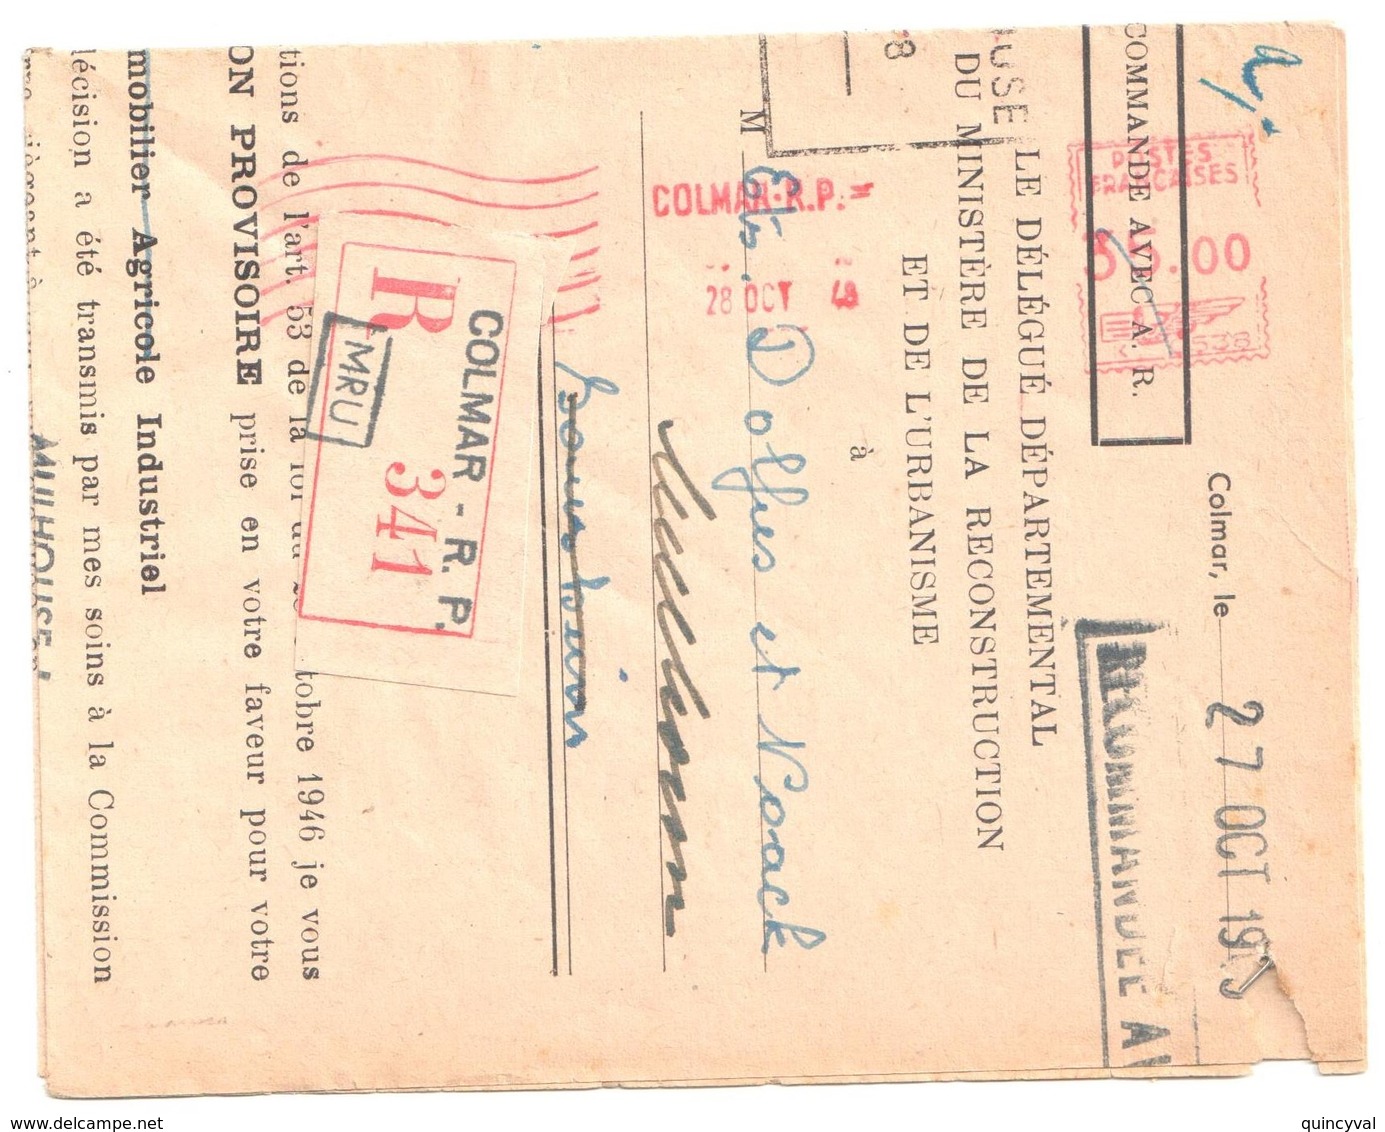 COLMAR RP Lettre Recommandée 28 10 1948 EMA Postes Françaises K Dest Sausheimb Ob Hexa Pointillé - EMA (Printer Machine)